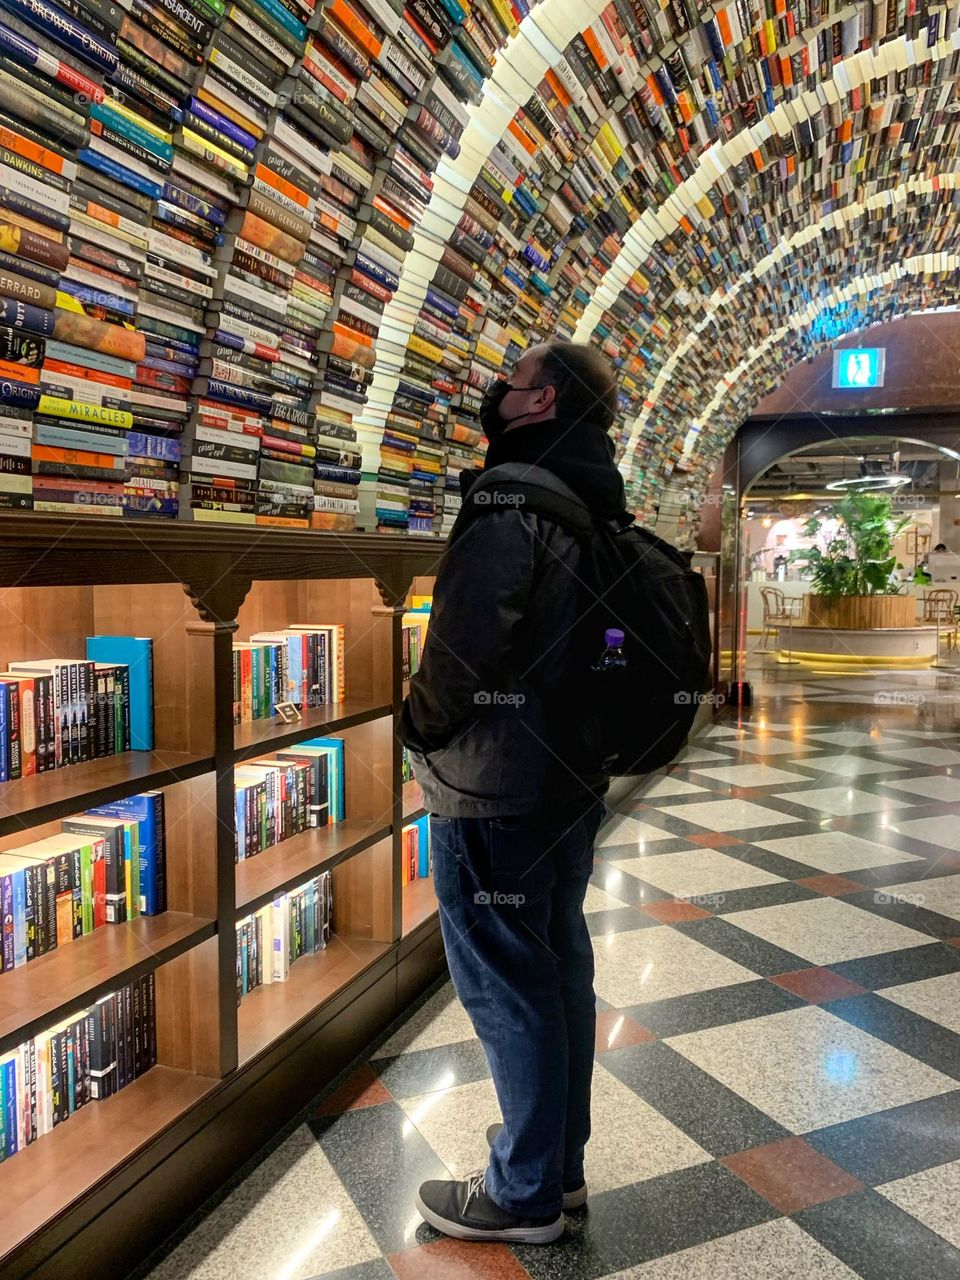 Tour in a bookstore 